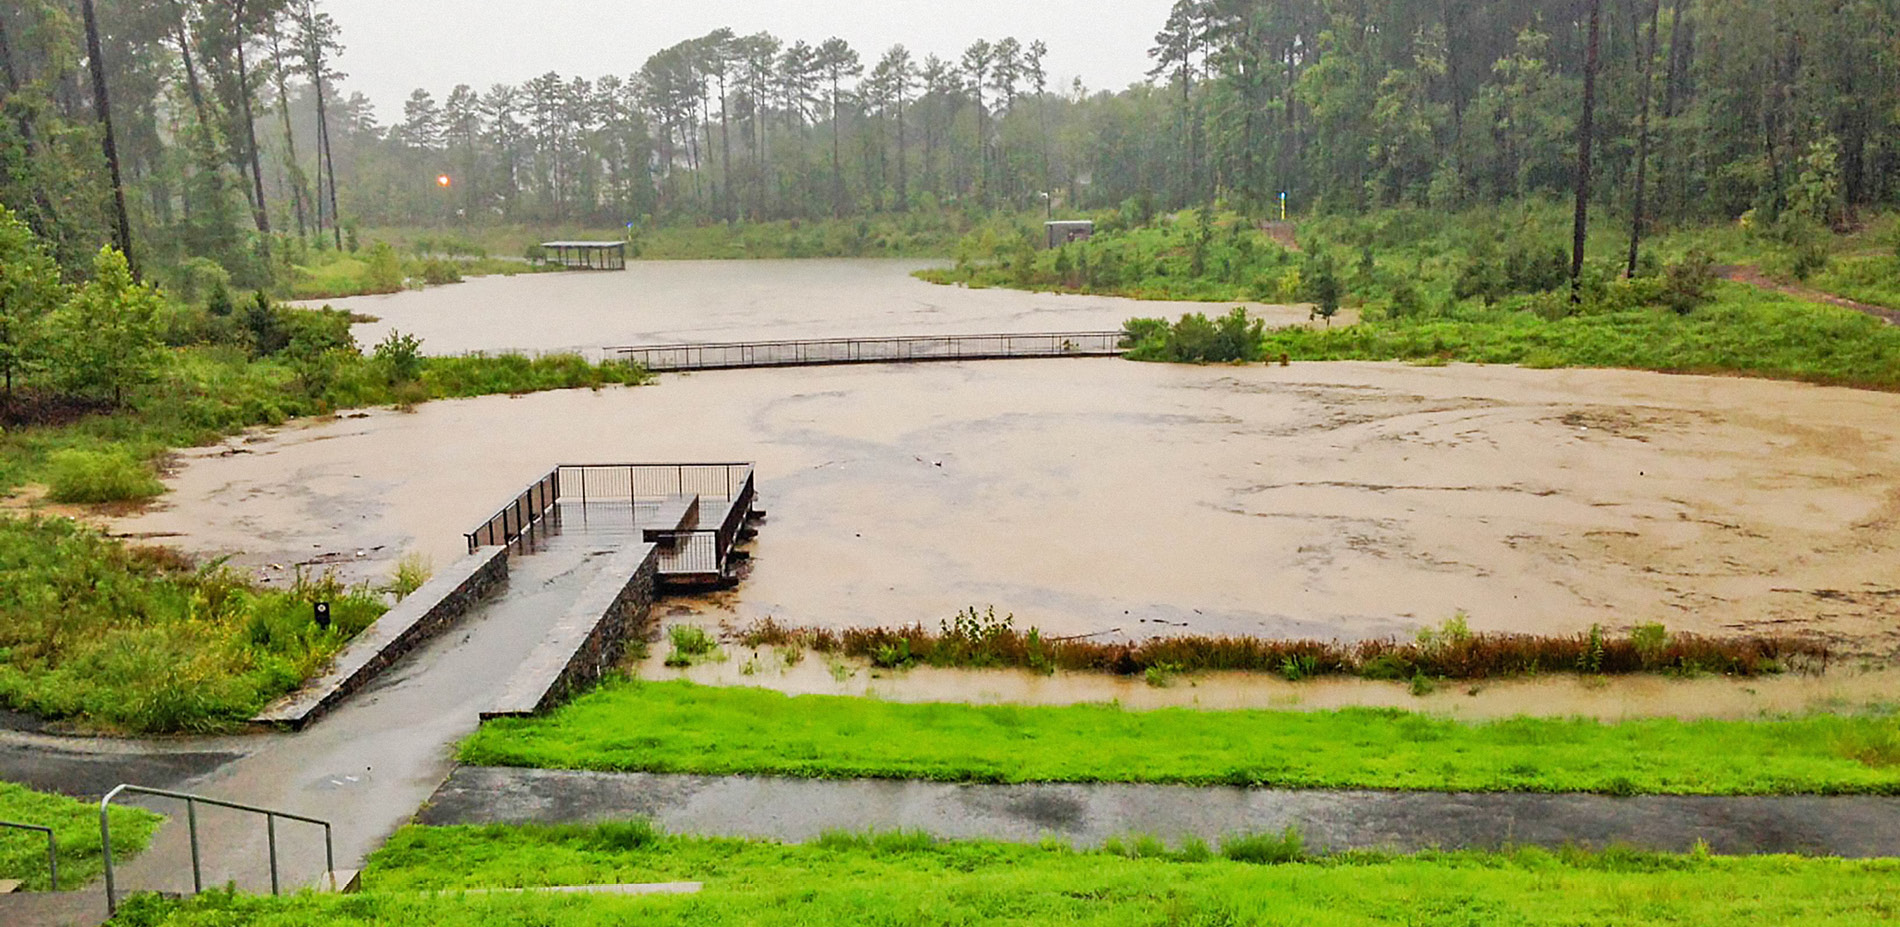 Duke University Water Reclamation Pond Image 4